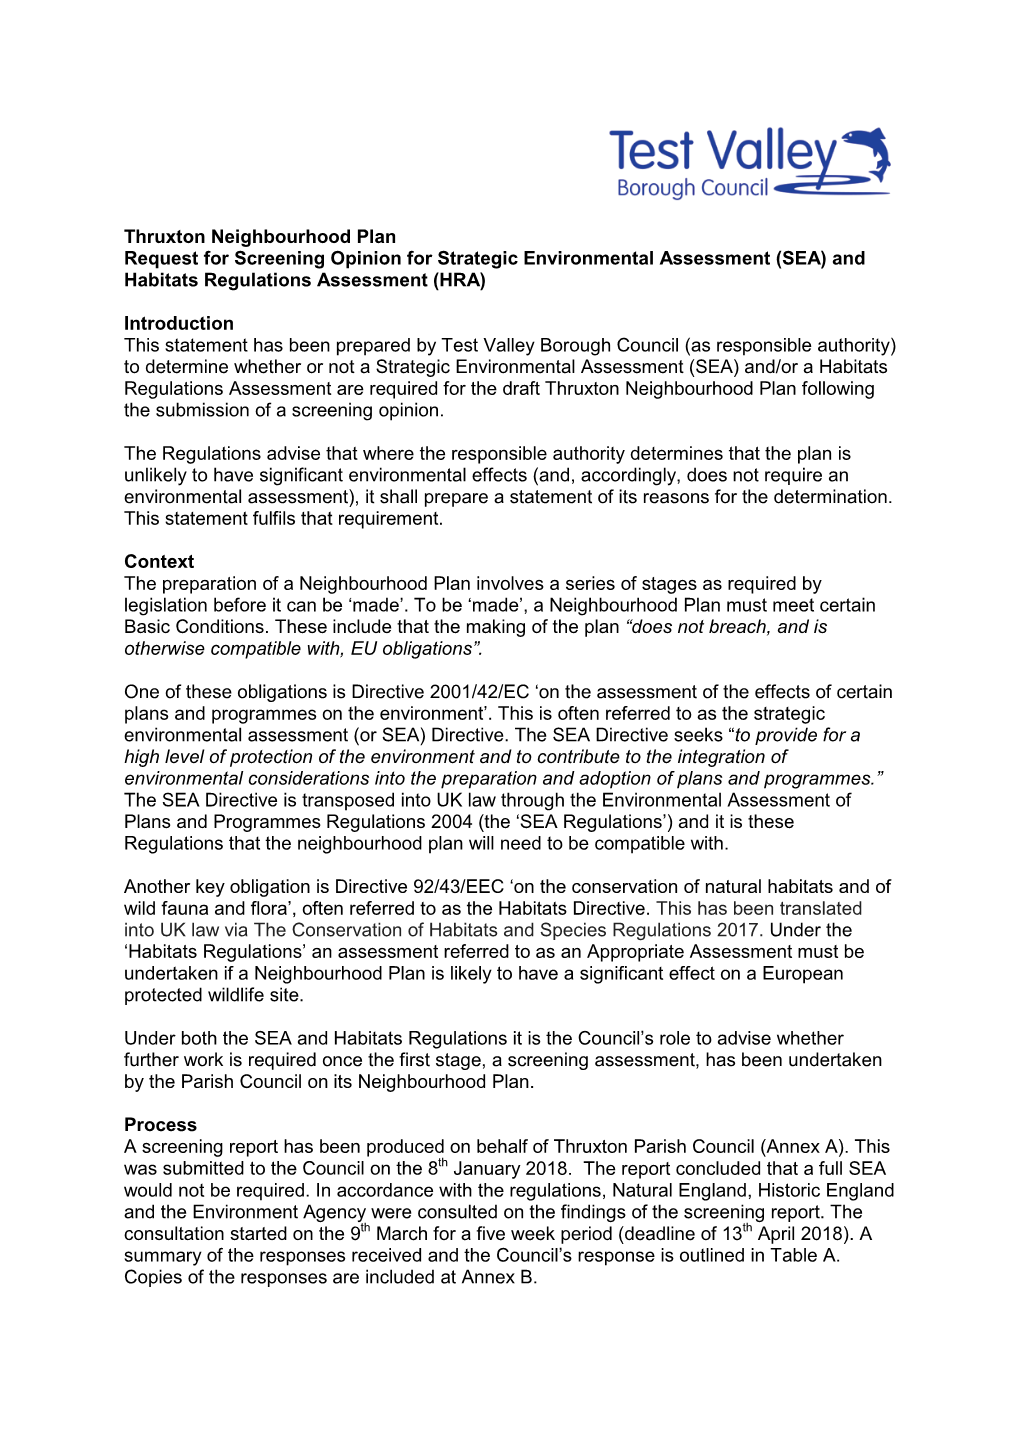 Thruxton Neighbourhood Plan Request for Screening Opinion for Strategic Environmental Assessment (SEA) and Habitats Regulations Assessment (HRA)